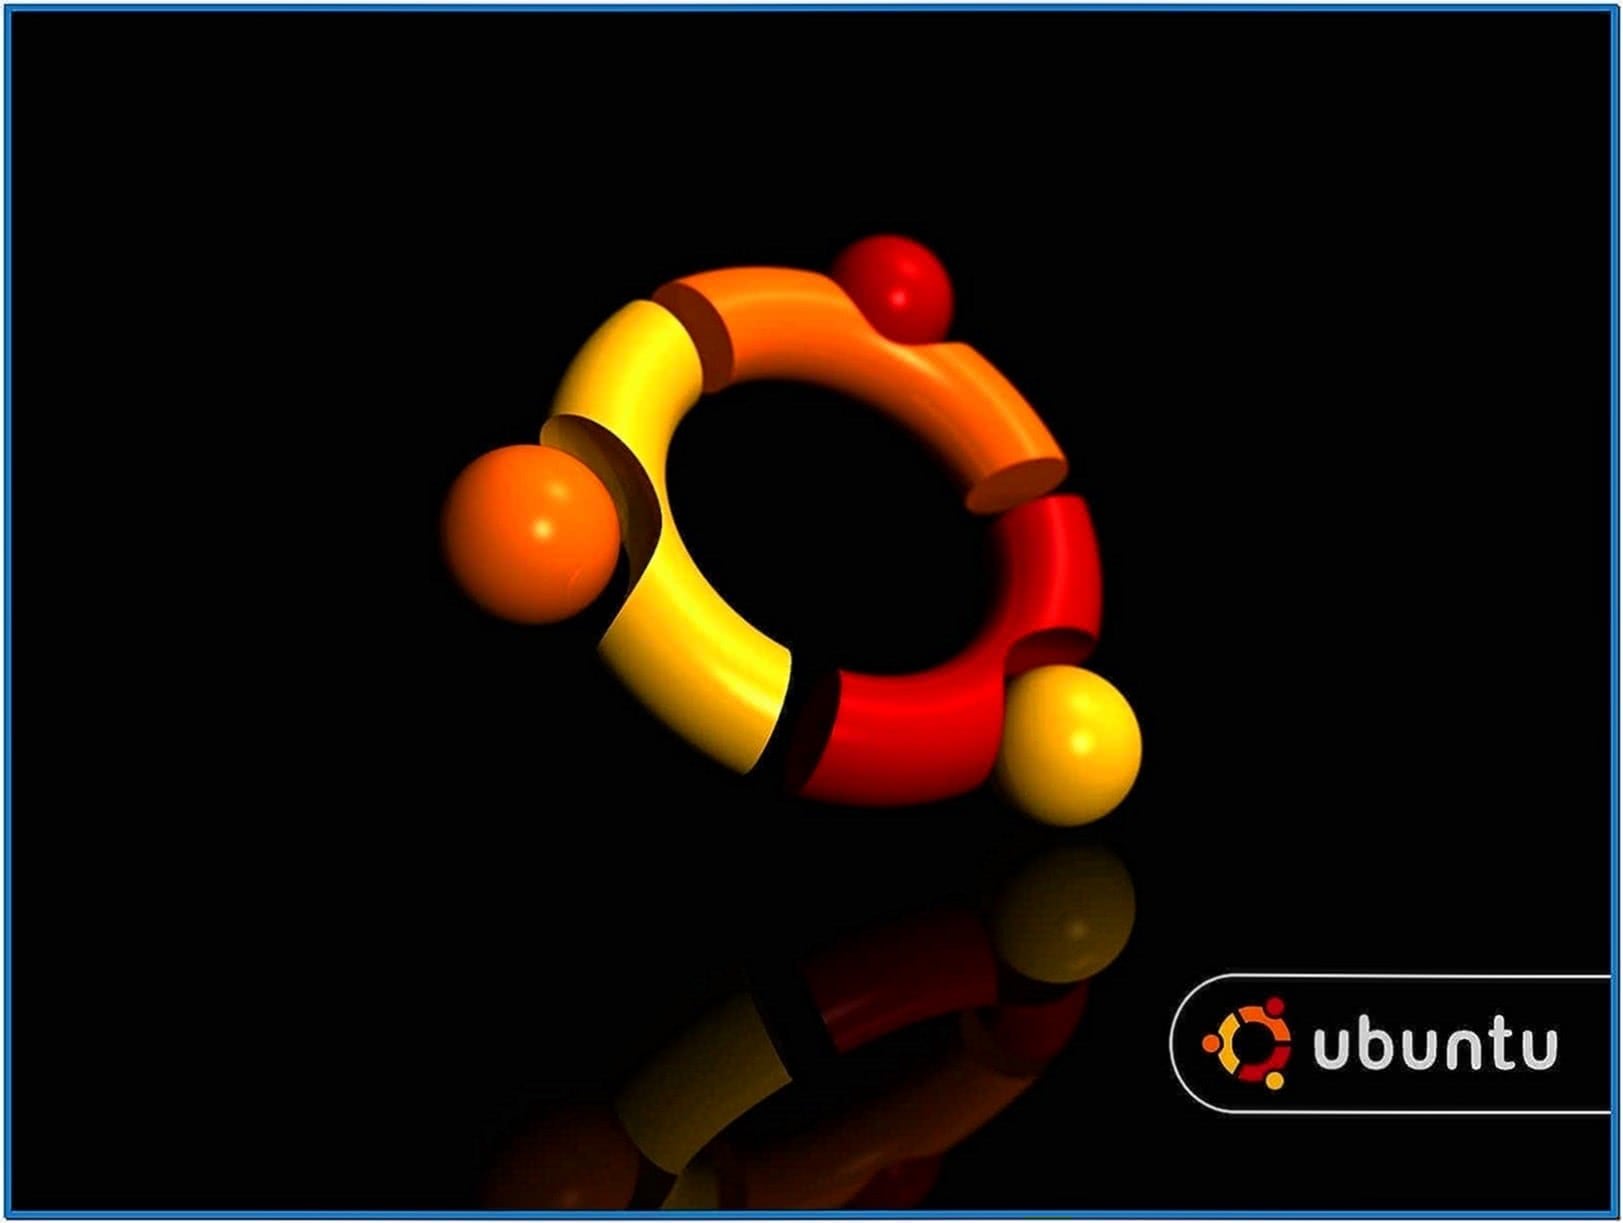 Screensaver Photo Ubuntu